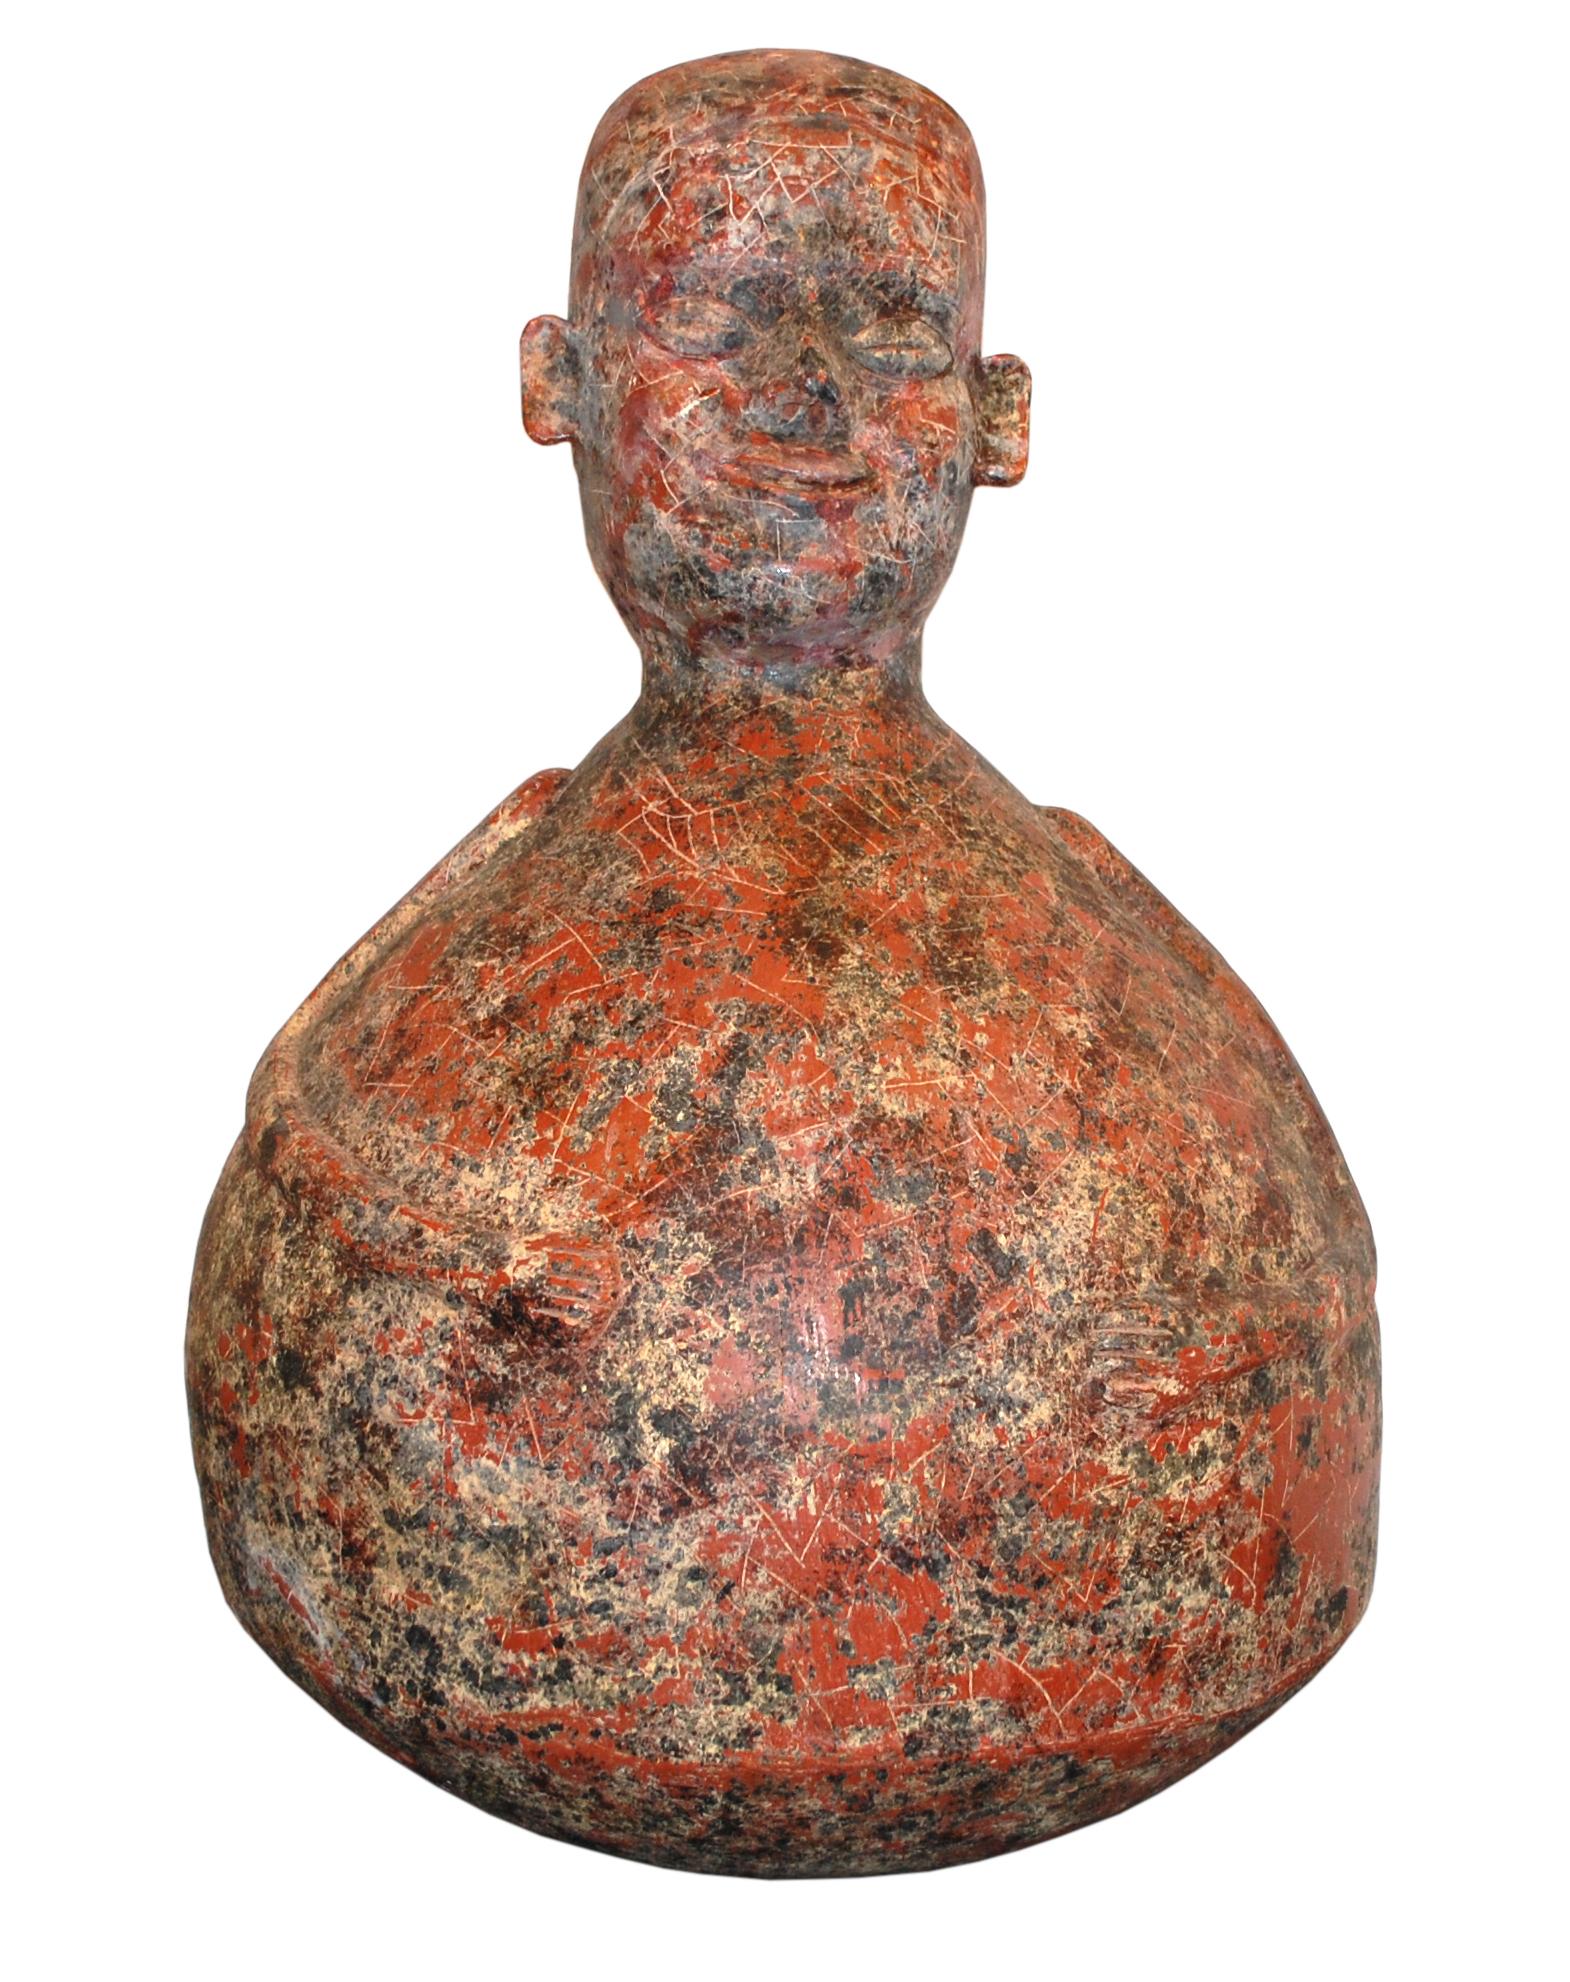  Terracotta Happy Man Sculpture - Brown Figurative Sculpture by Walter Bastianetto